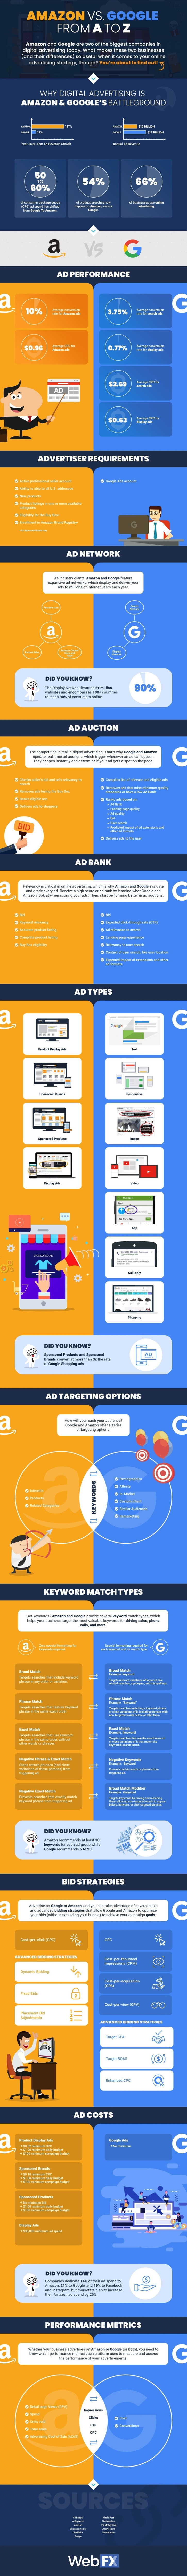 Amazon Vs Google Advertising Infographic by Webfx